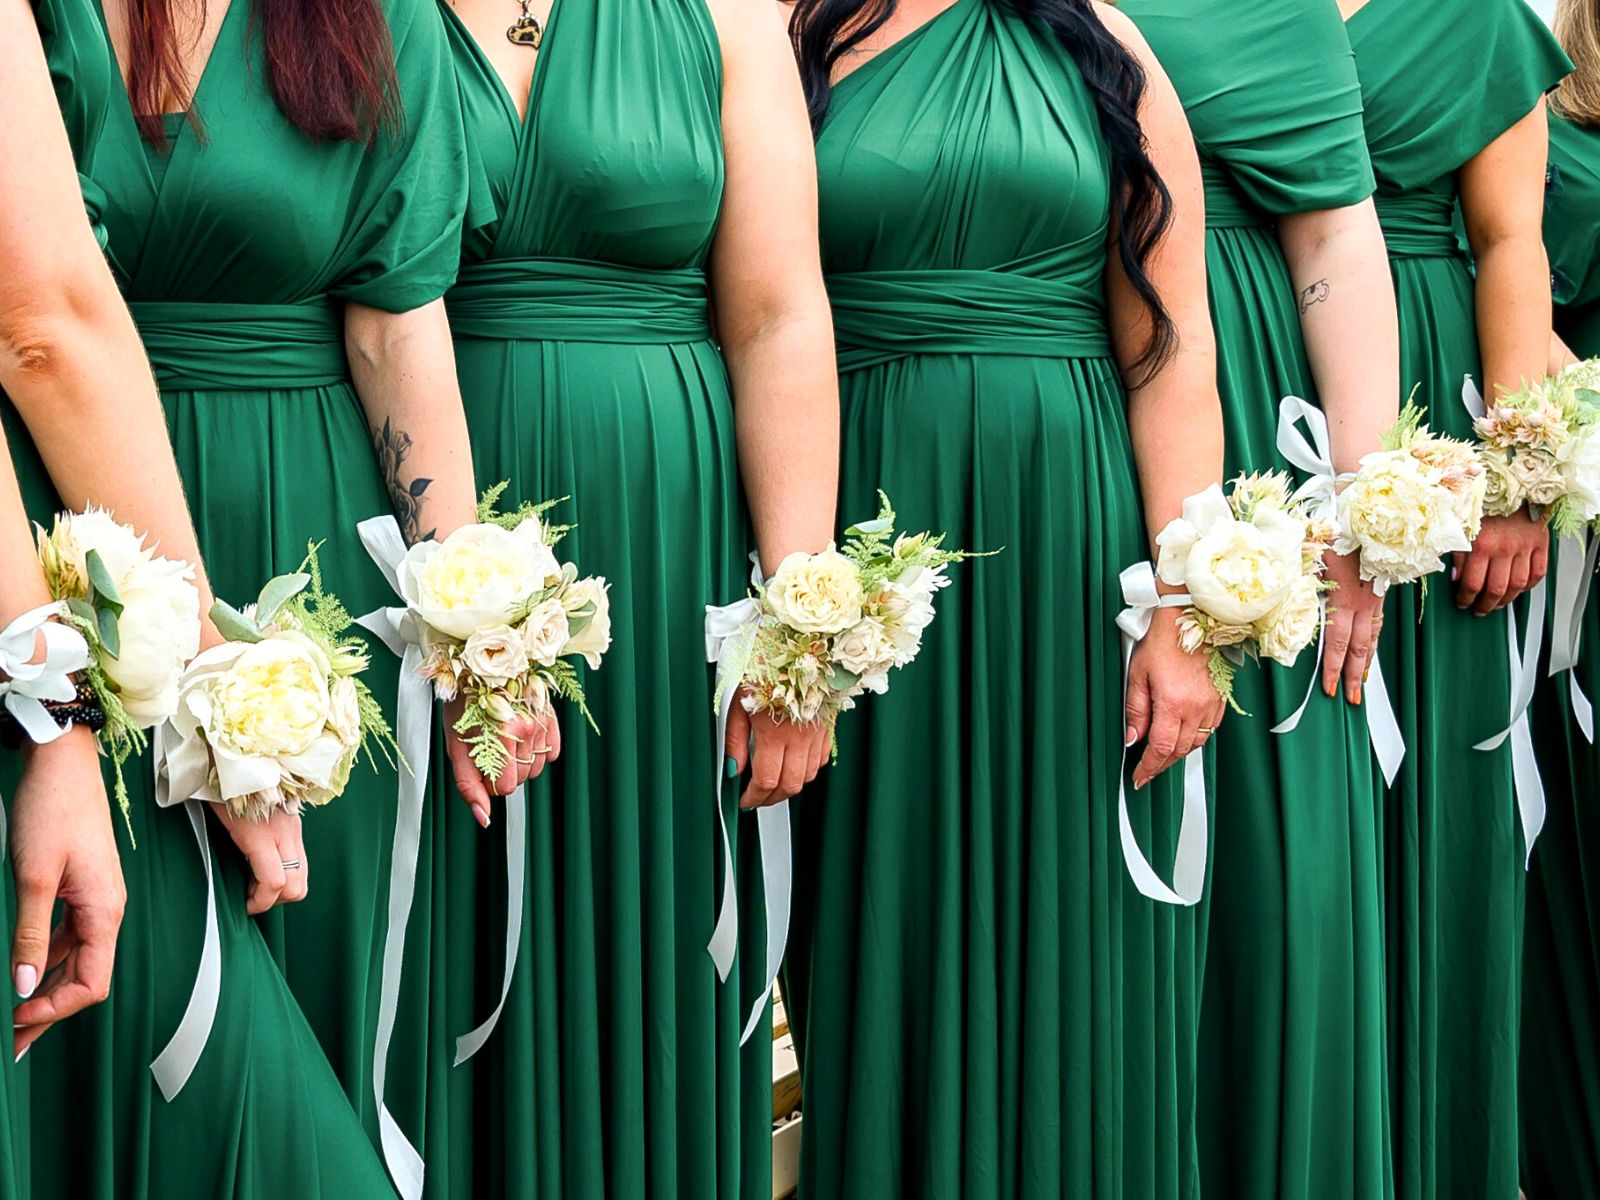 Flower Bracelets with Protea Blushing Bride - on Thursd